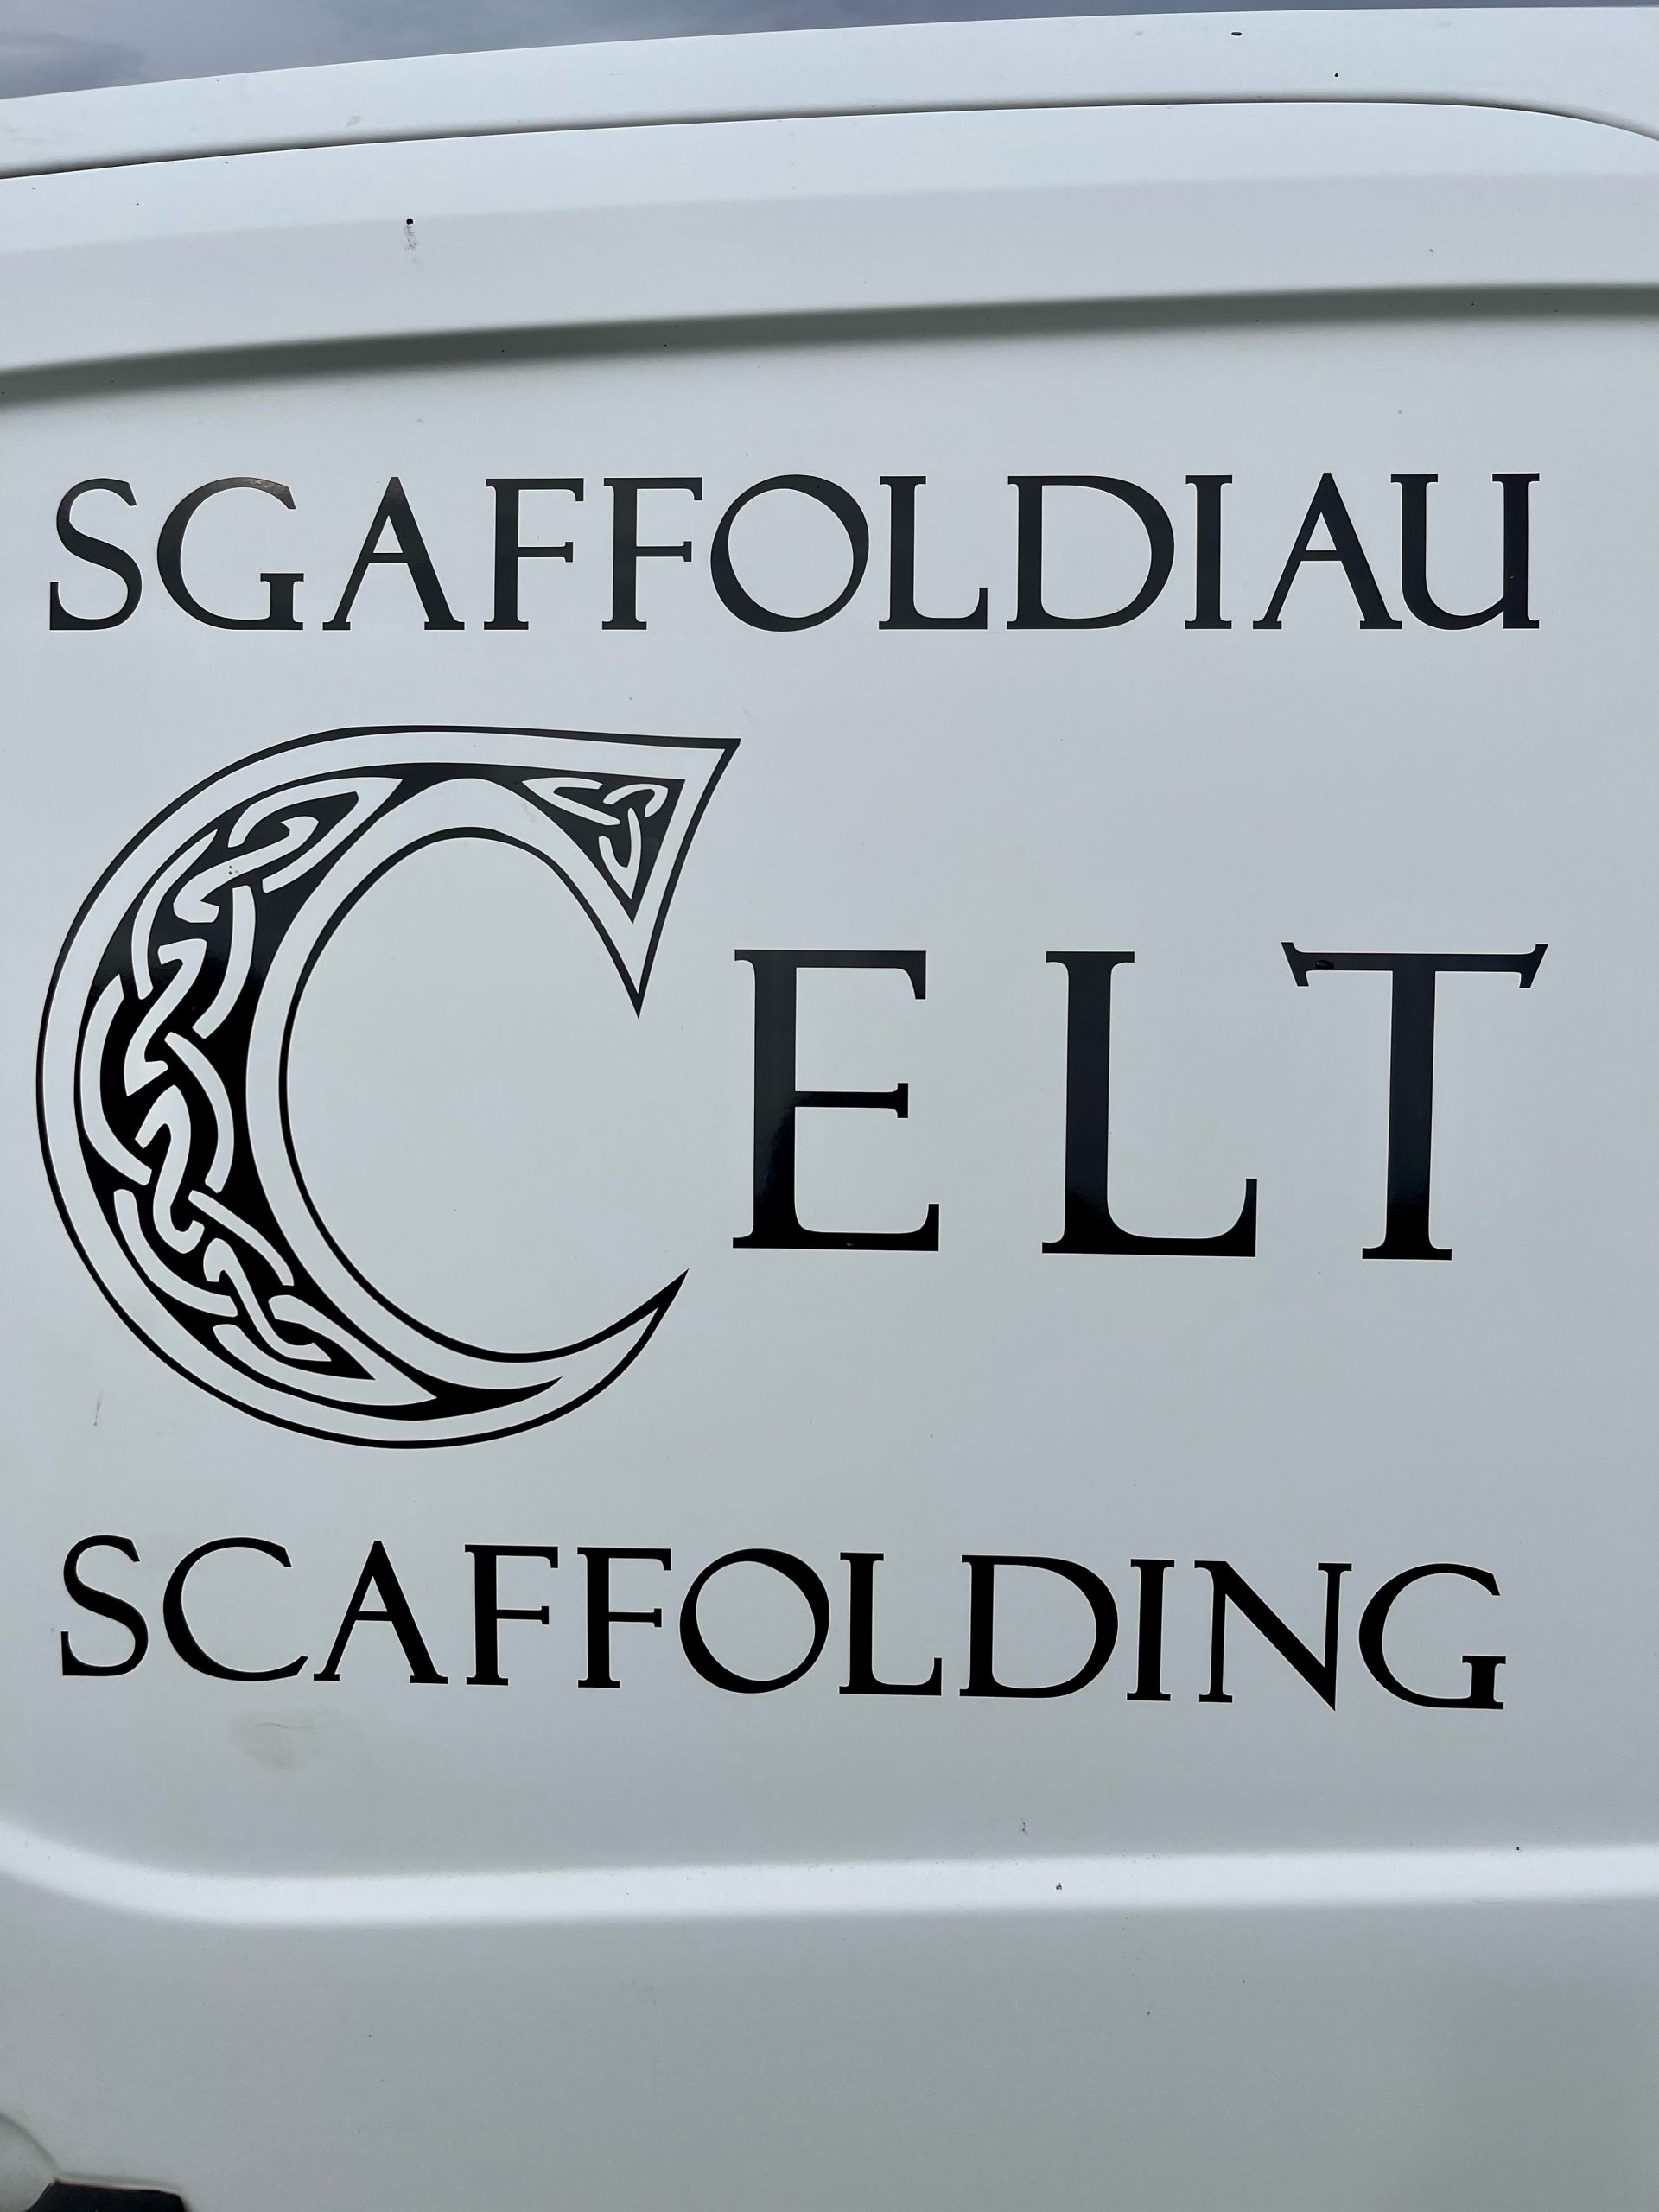 Celt Scaffolding